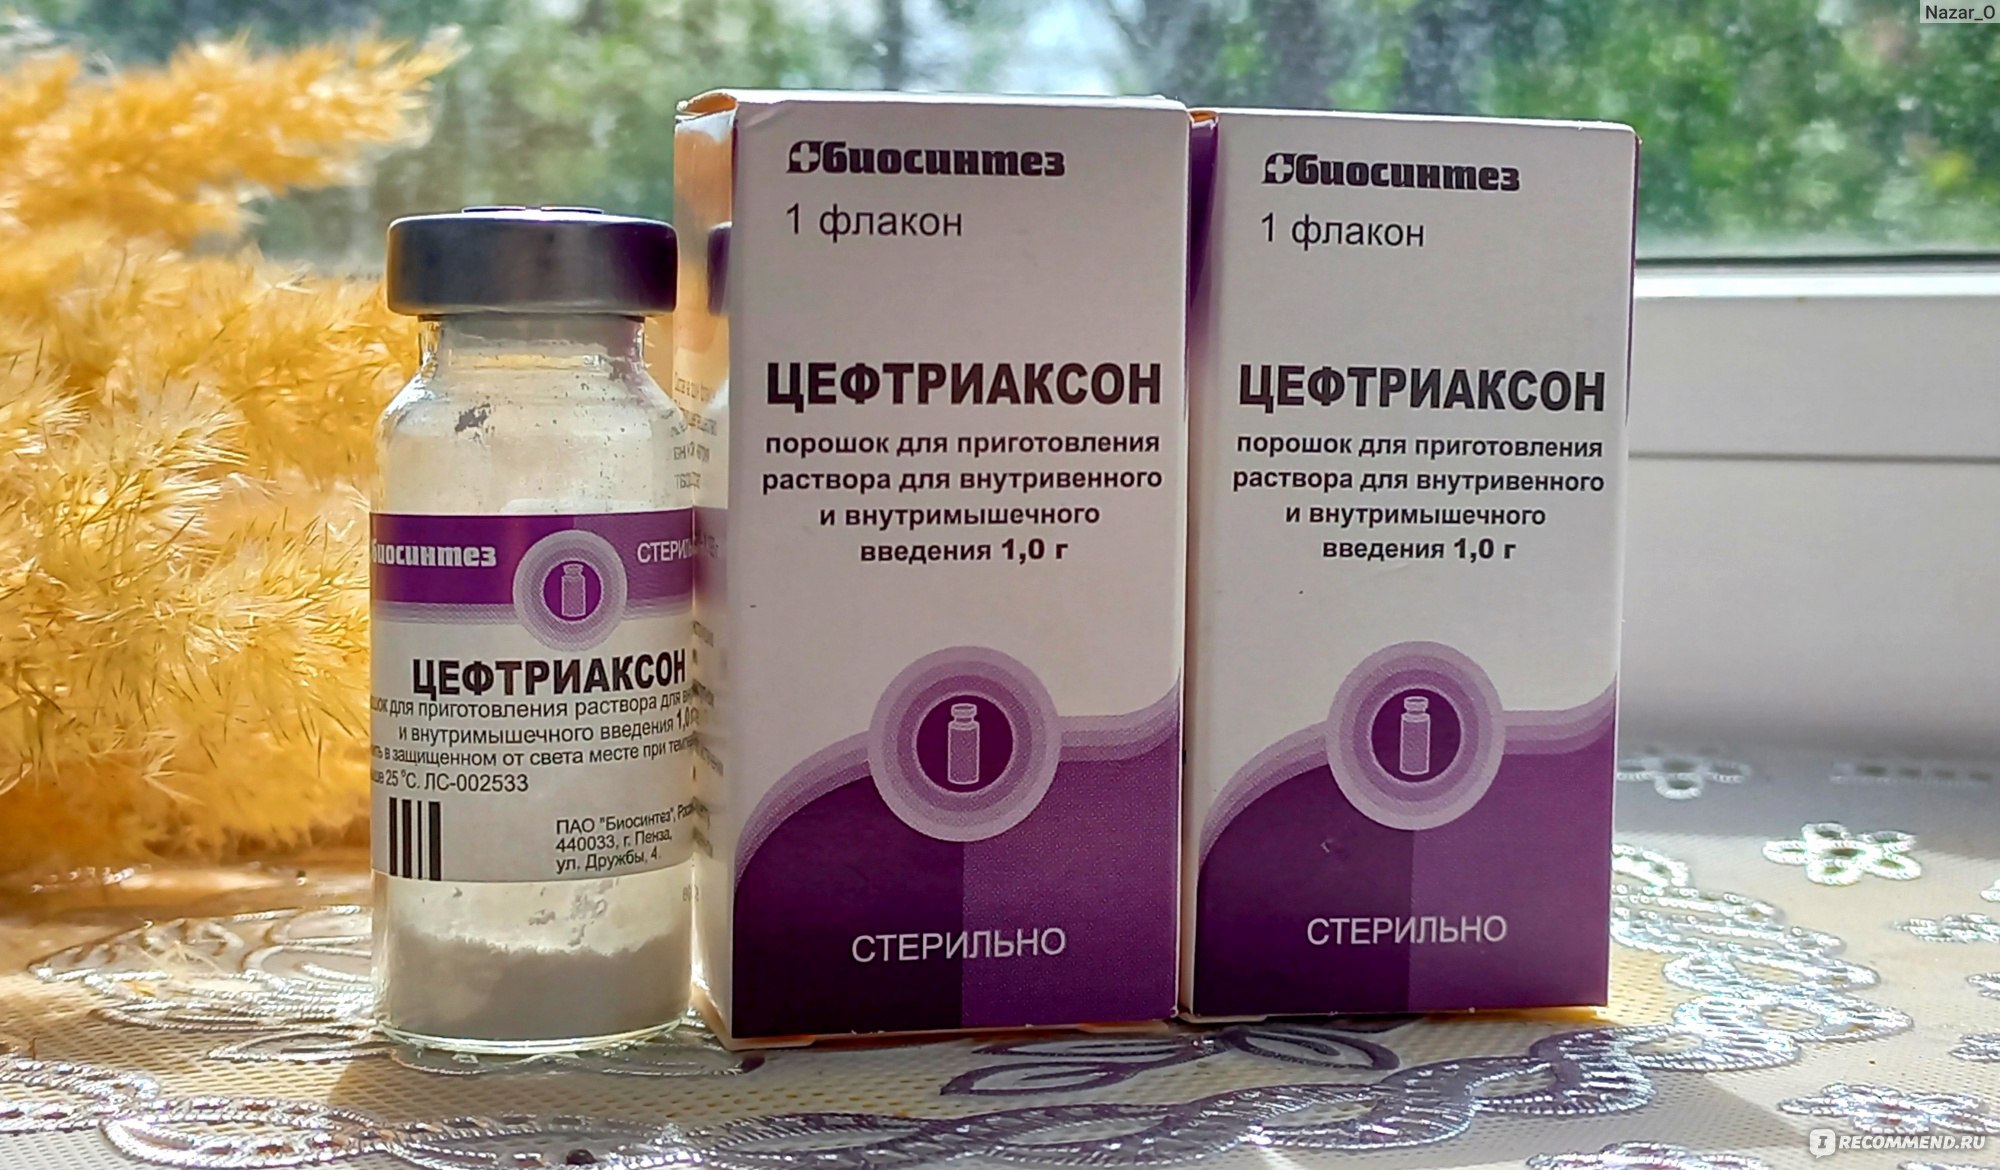 Антибиотики ОАО "Биосинтез" Цефтриаксон фото